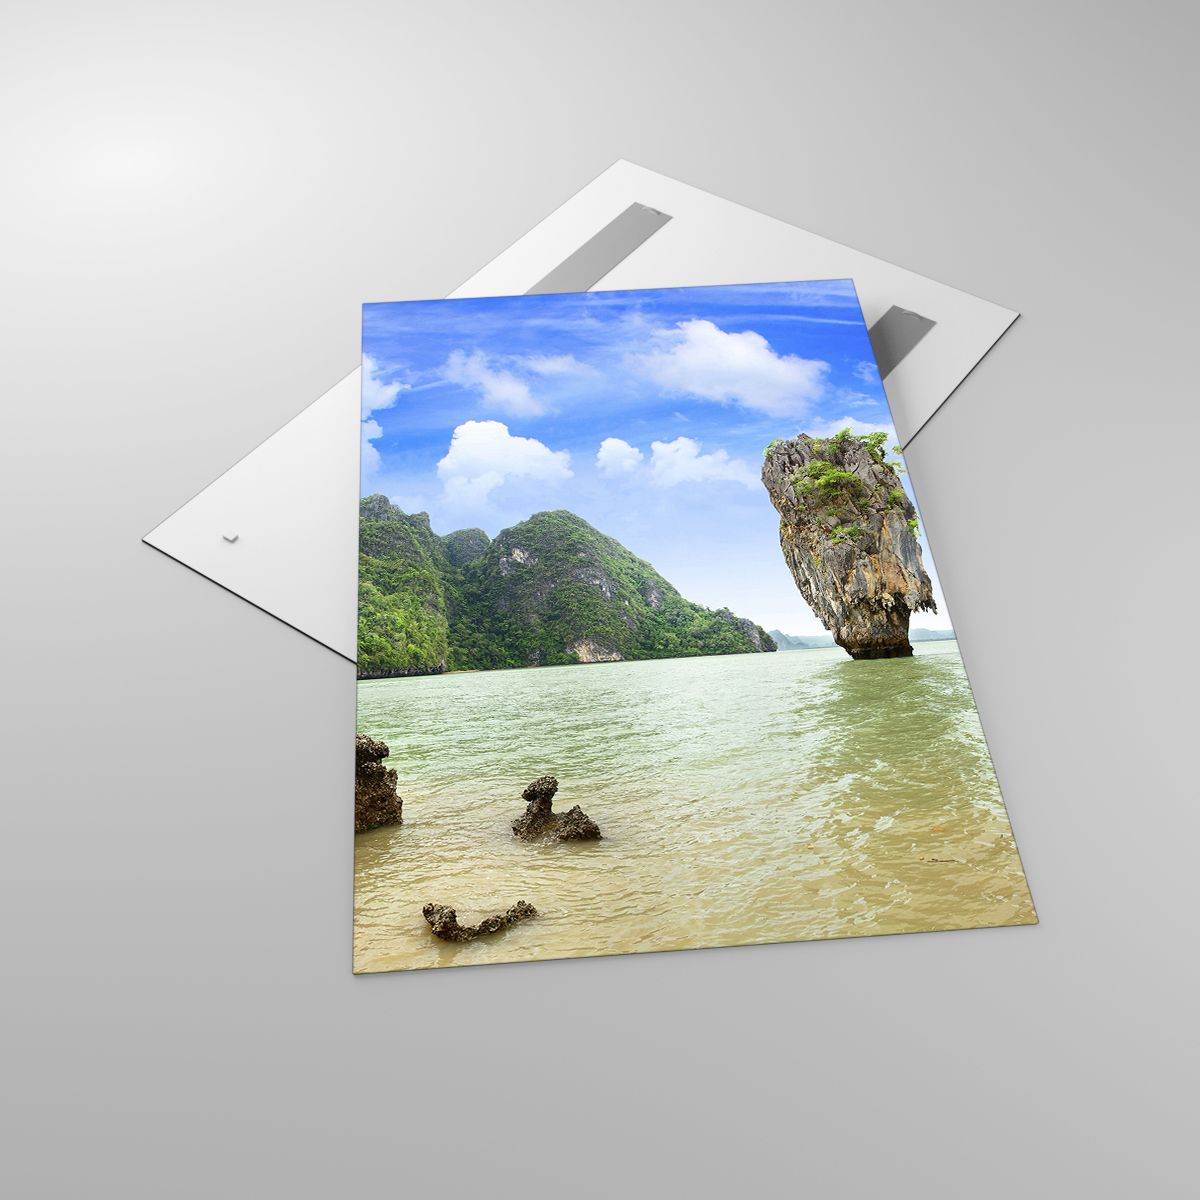 Glasbild Landschaft, Glasbild Natur, Glasbild Tropen, Glasbild Asien, Glasbild Paradies